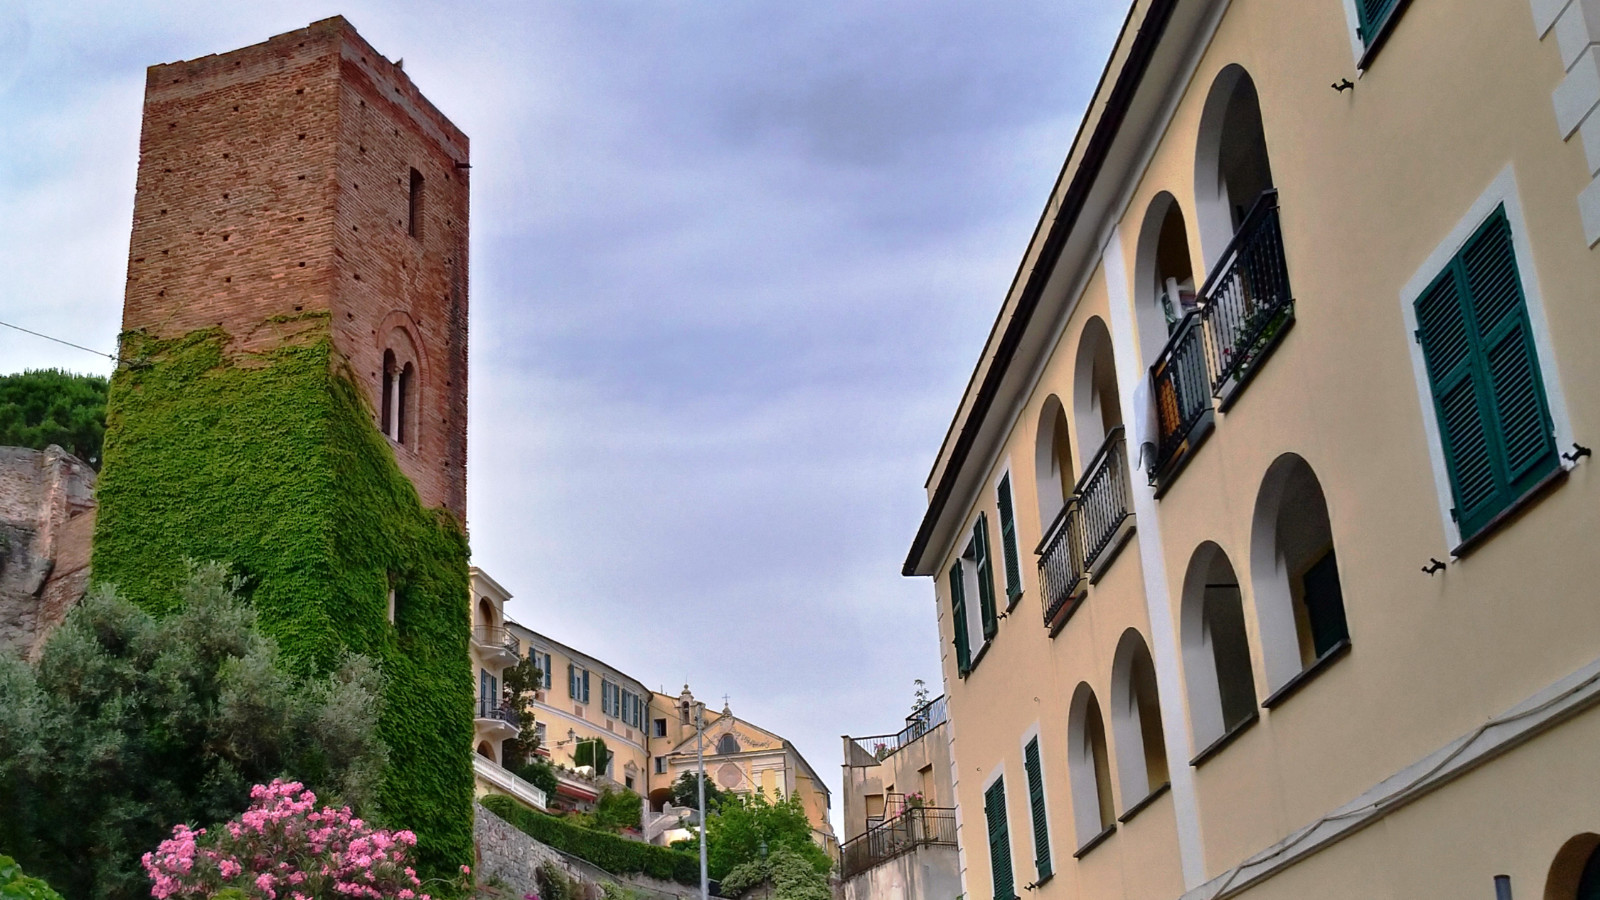 Most beautiful villages in Italy | Liguria - Noli